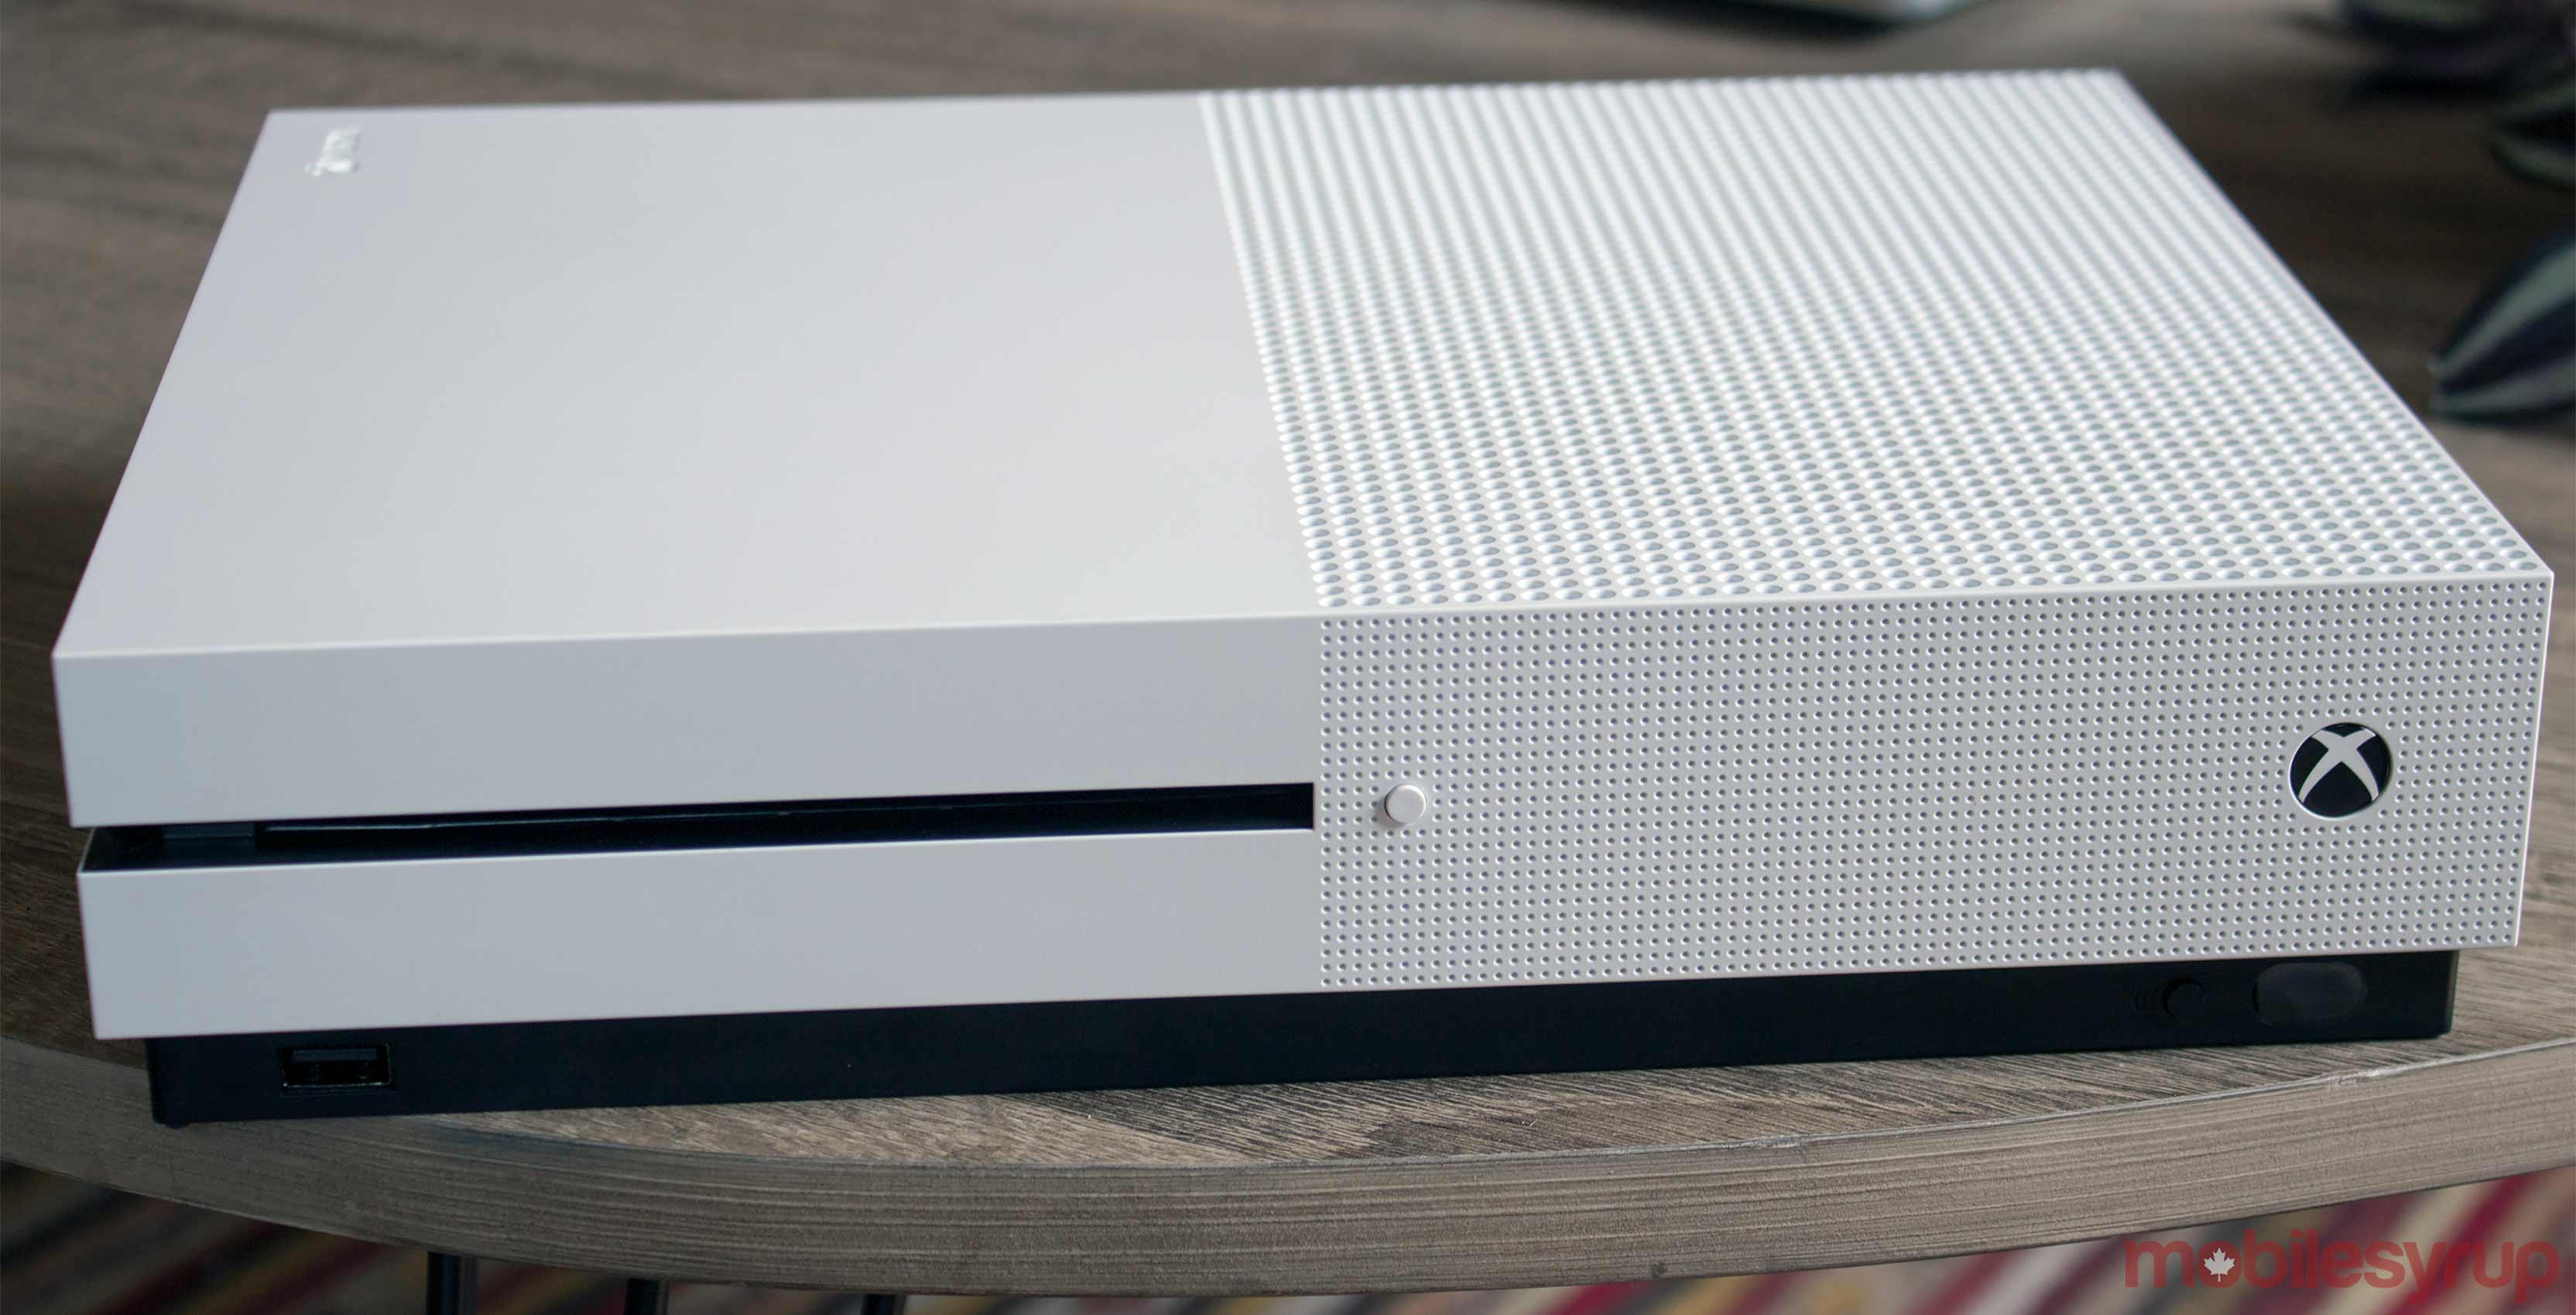 The white Xbox One S